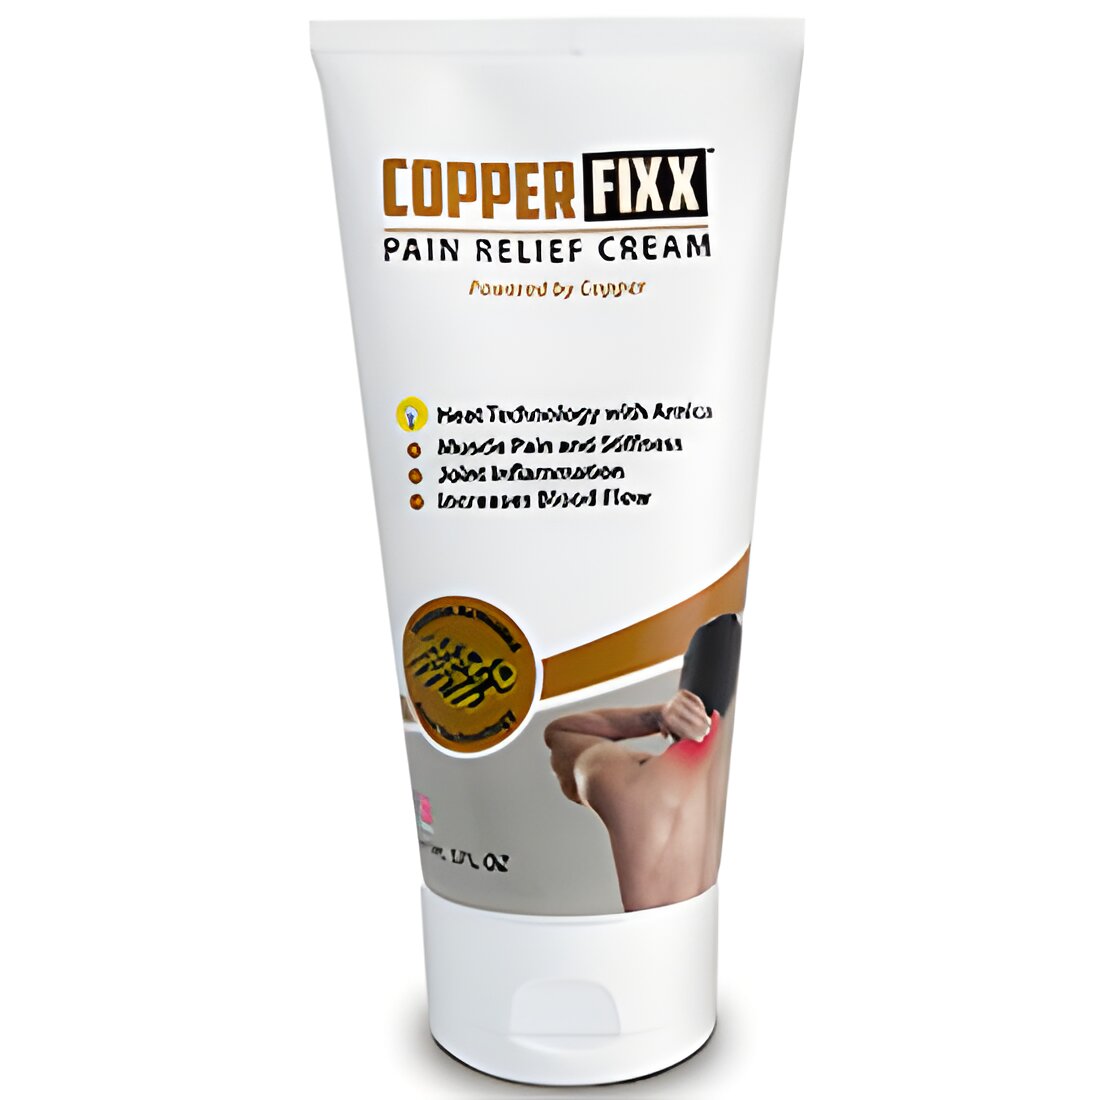 Free Copperfixx Pain Relief Cream